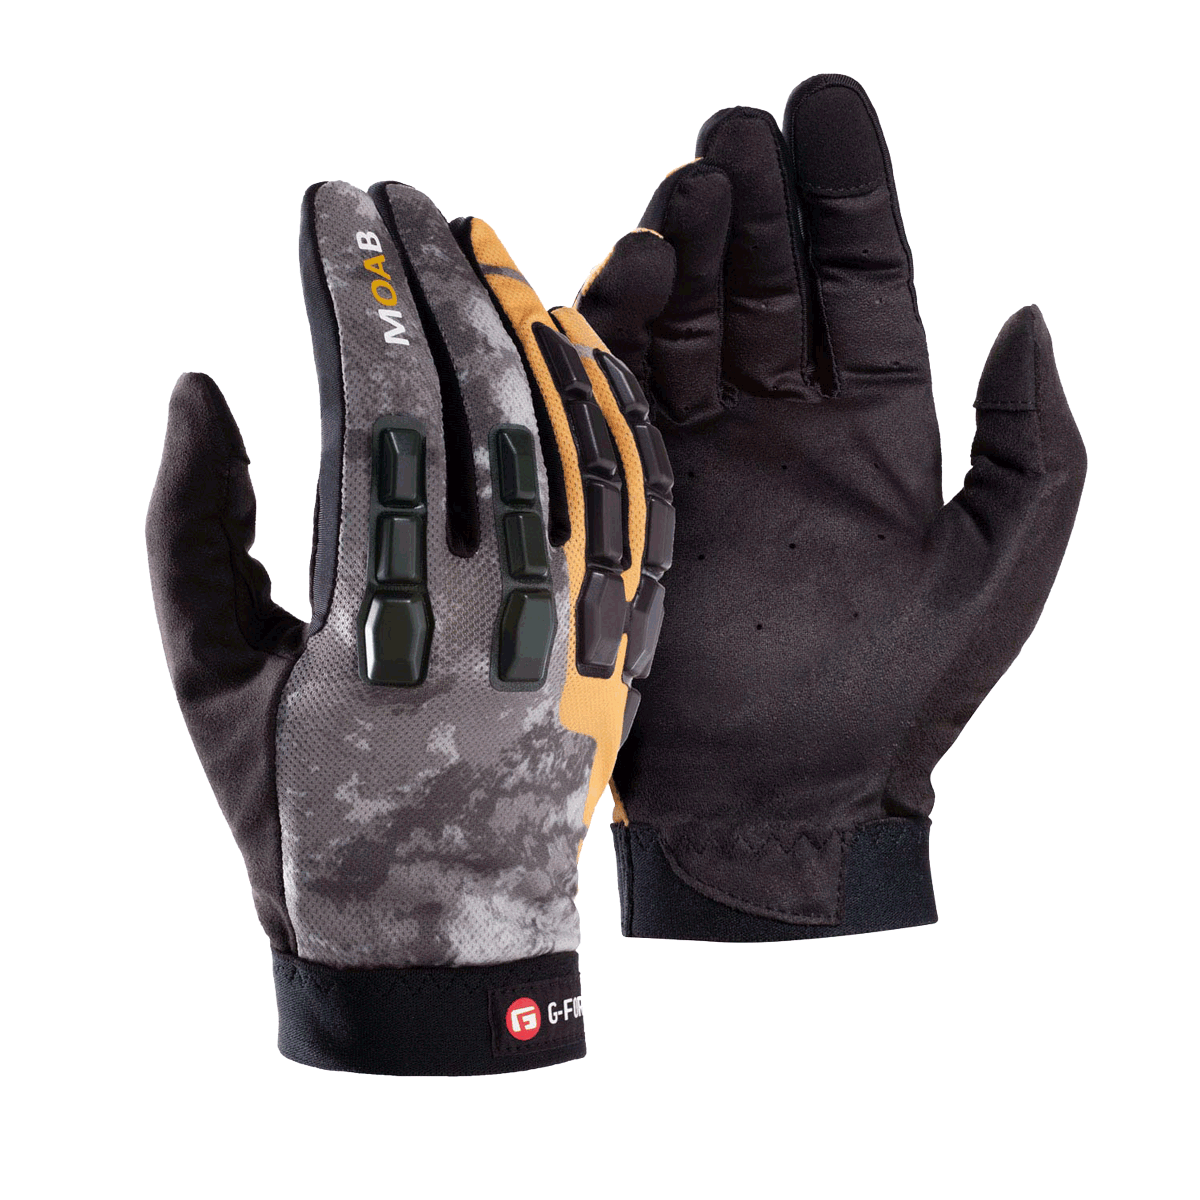 Moab Mountain Bike Gloves